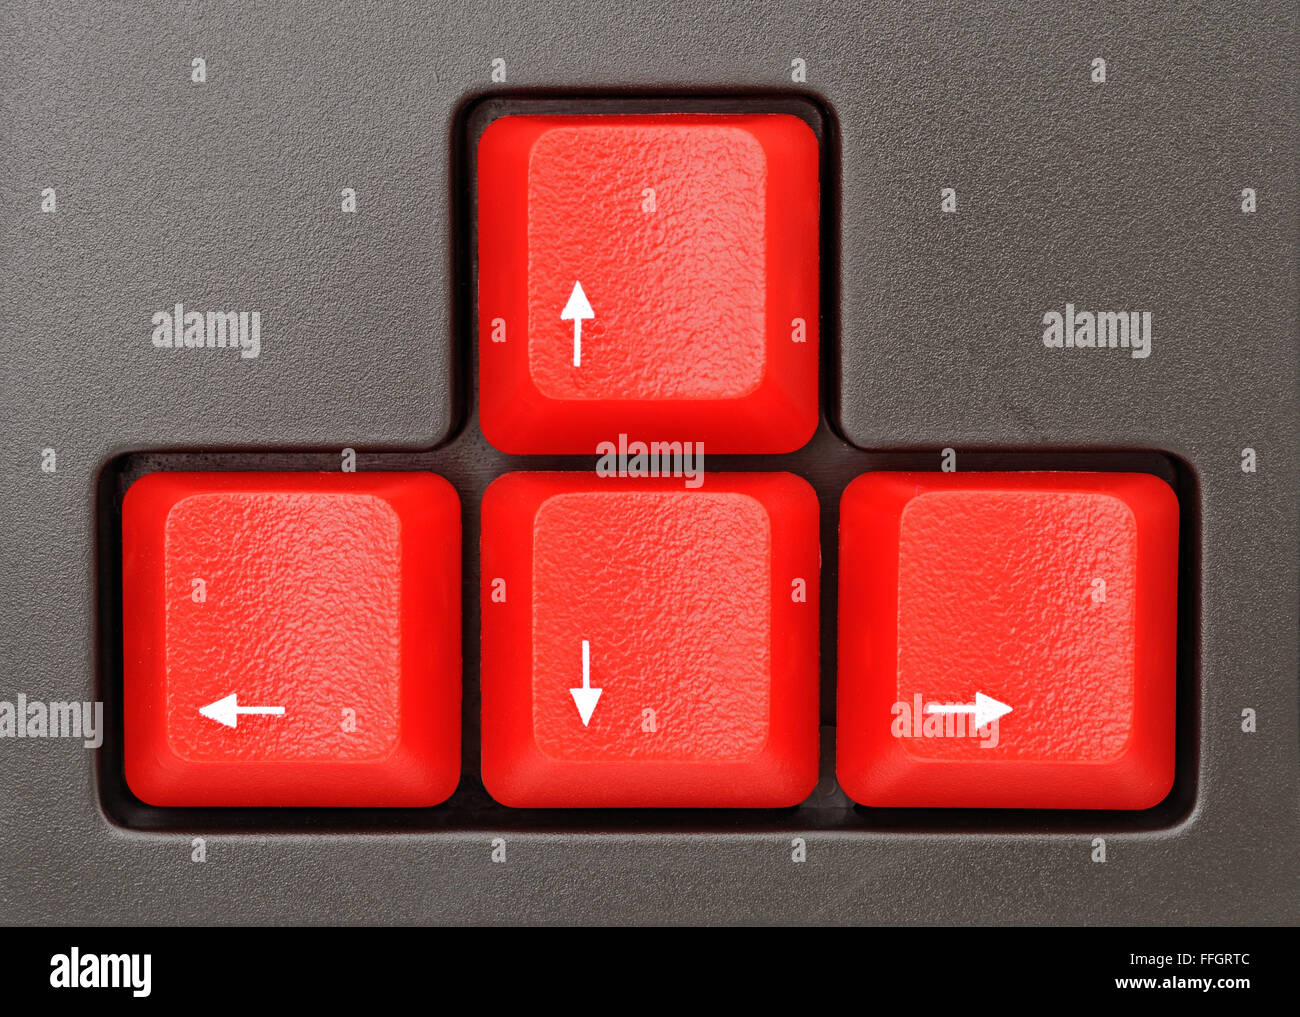 Red arrow keys on a computer keyboard. Navigation keys Stock Photo - Alamy